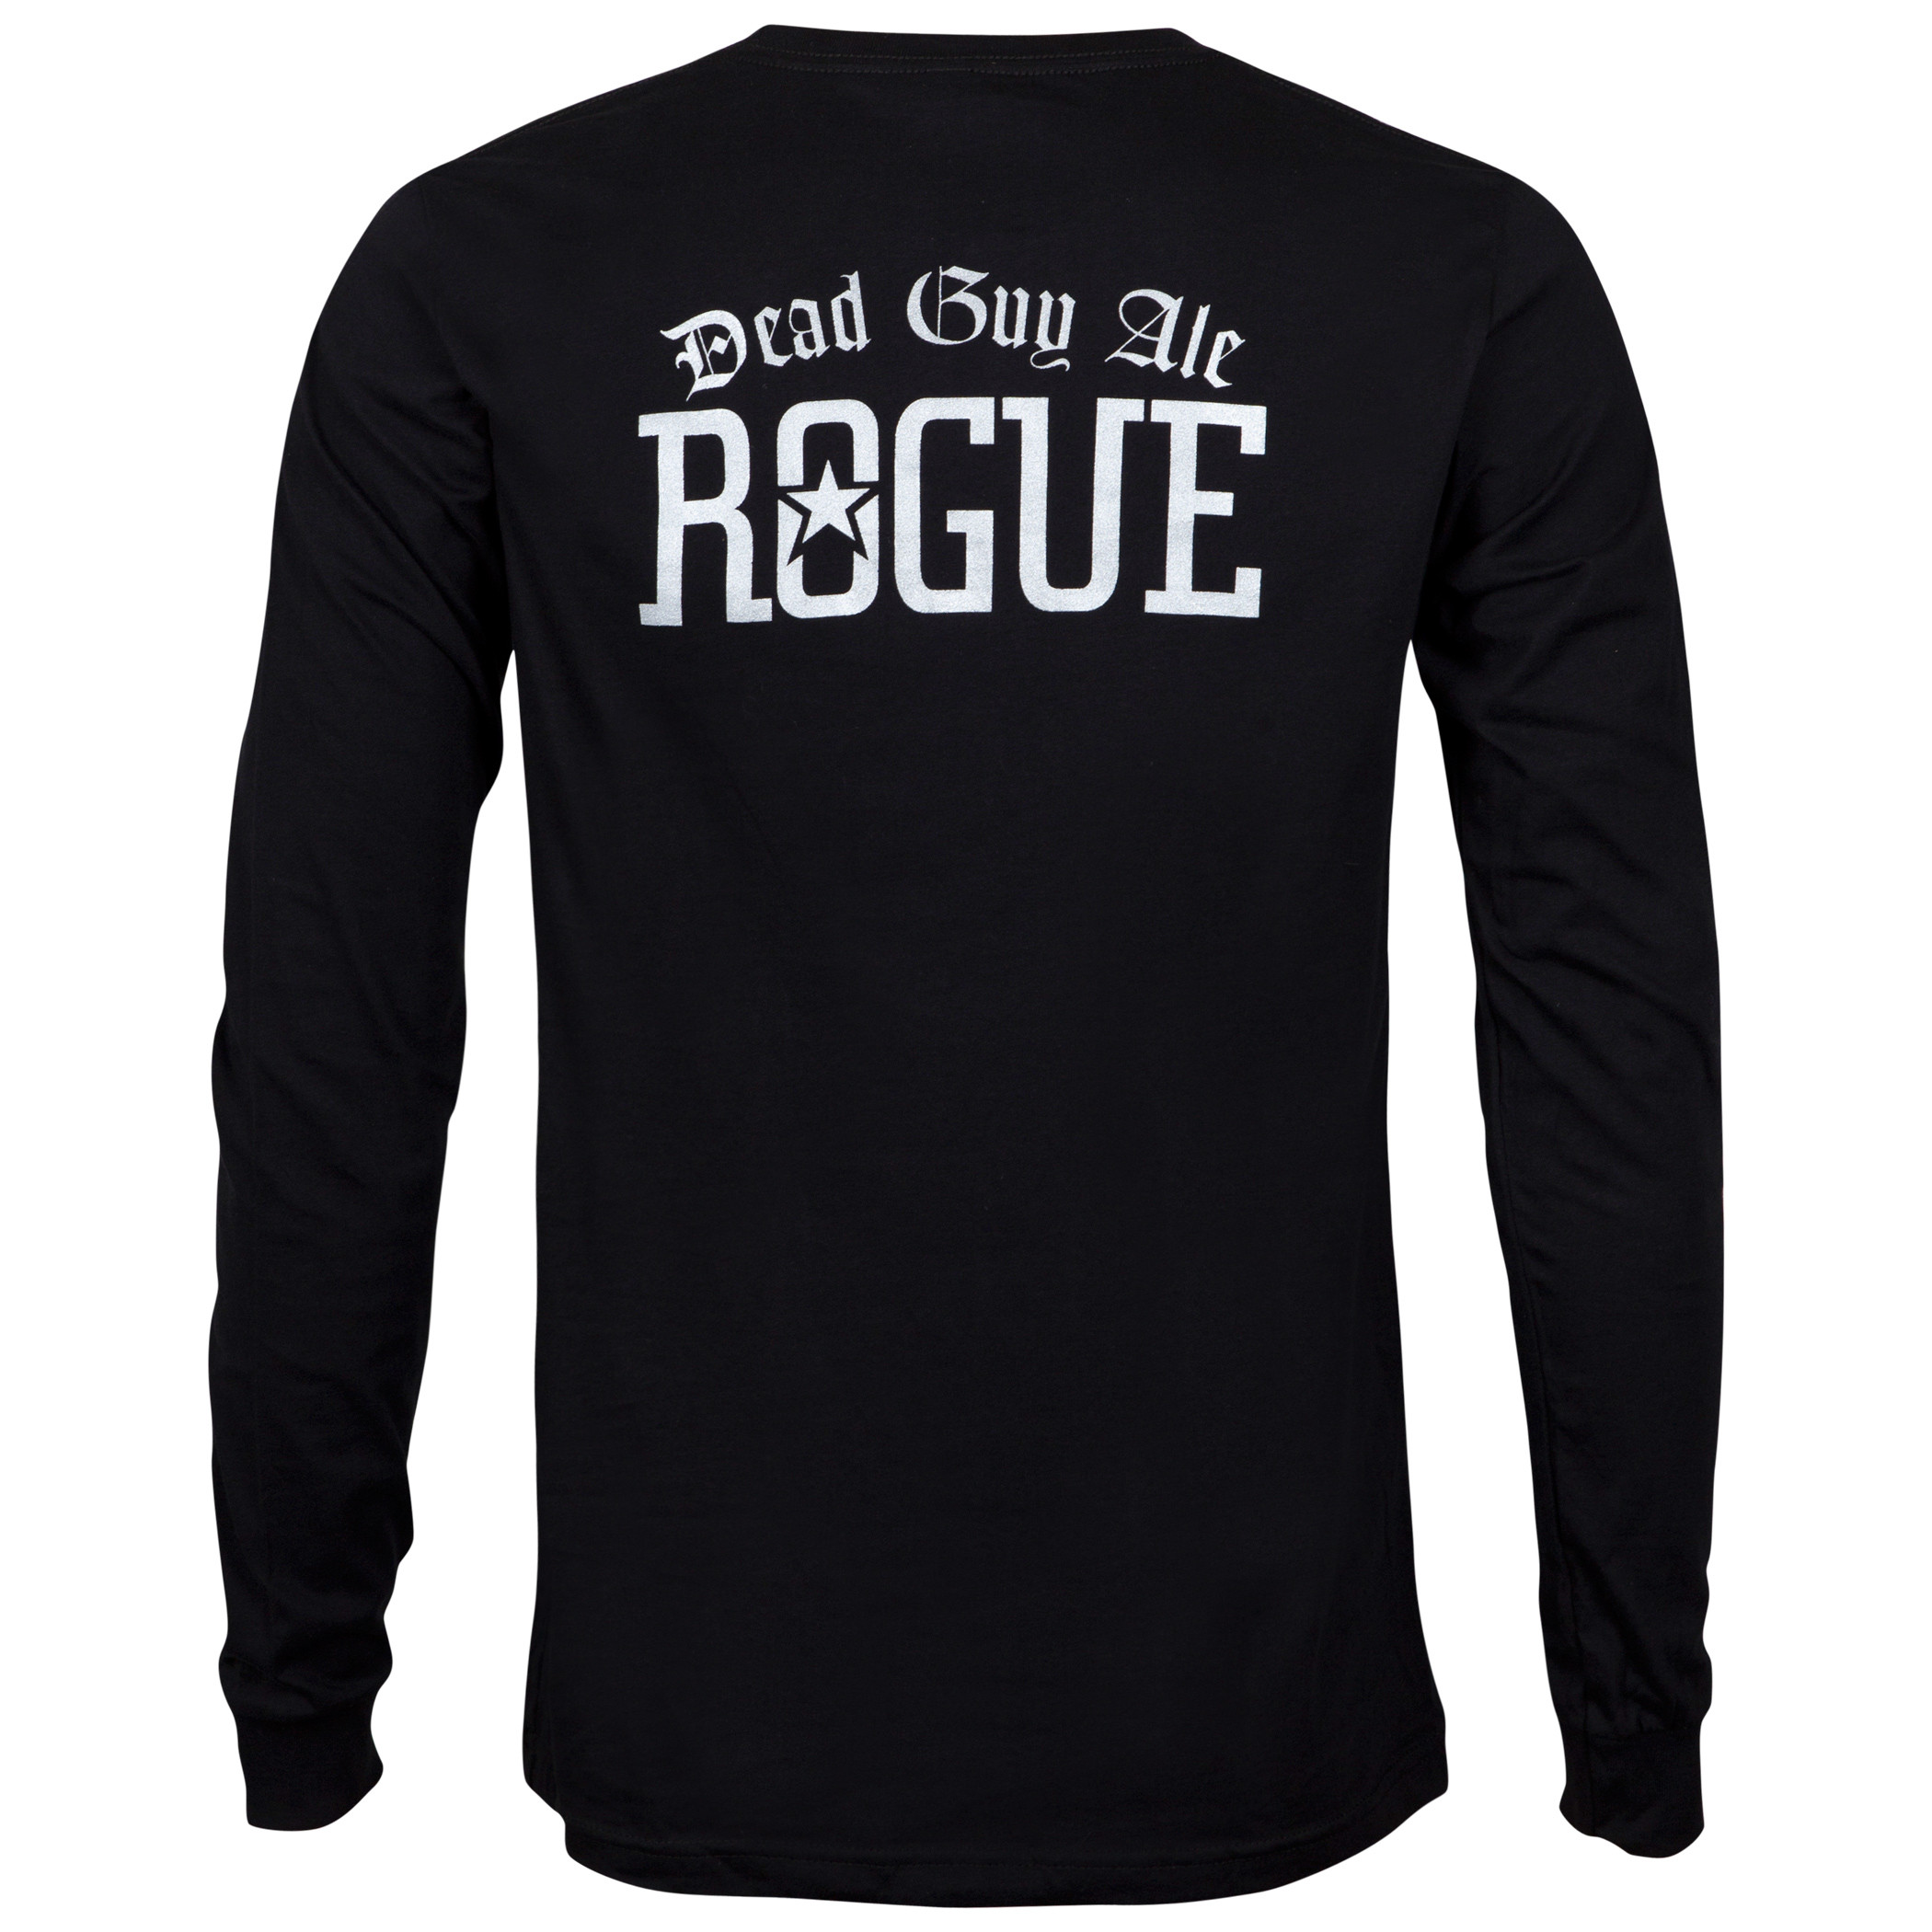 Rogue Ale Dead Guy Ale Black Long Sleeve Tee Shirt